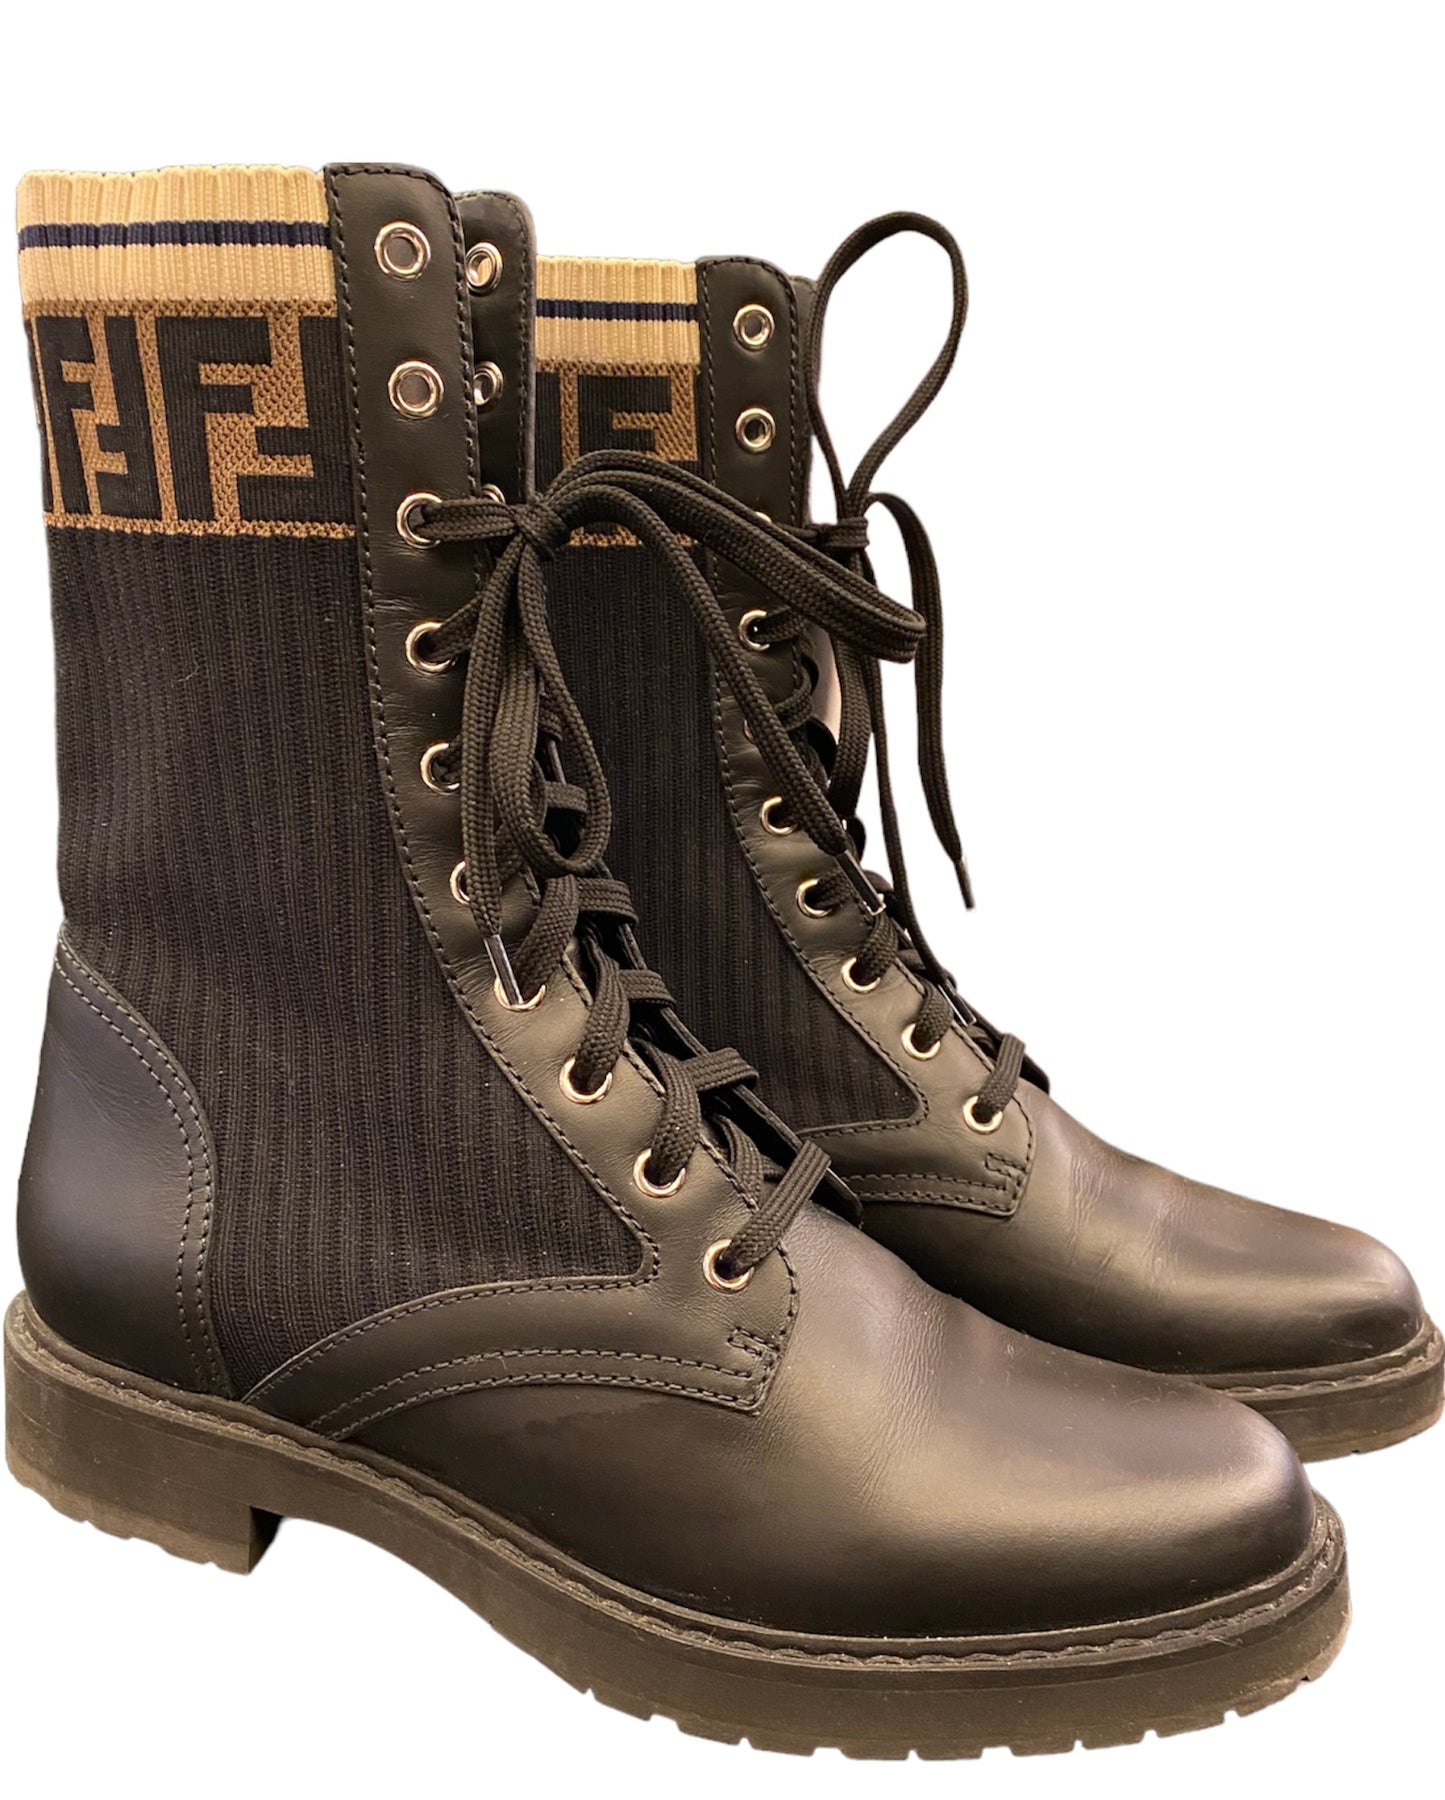 FENDI Leather Boots Size 39